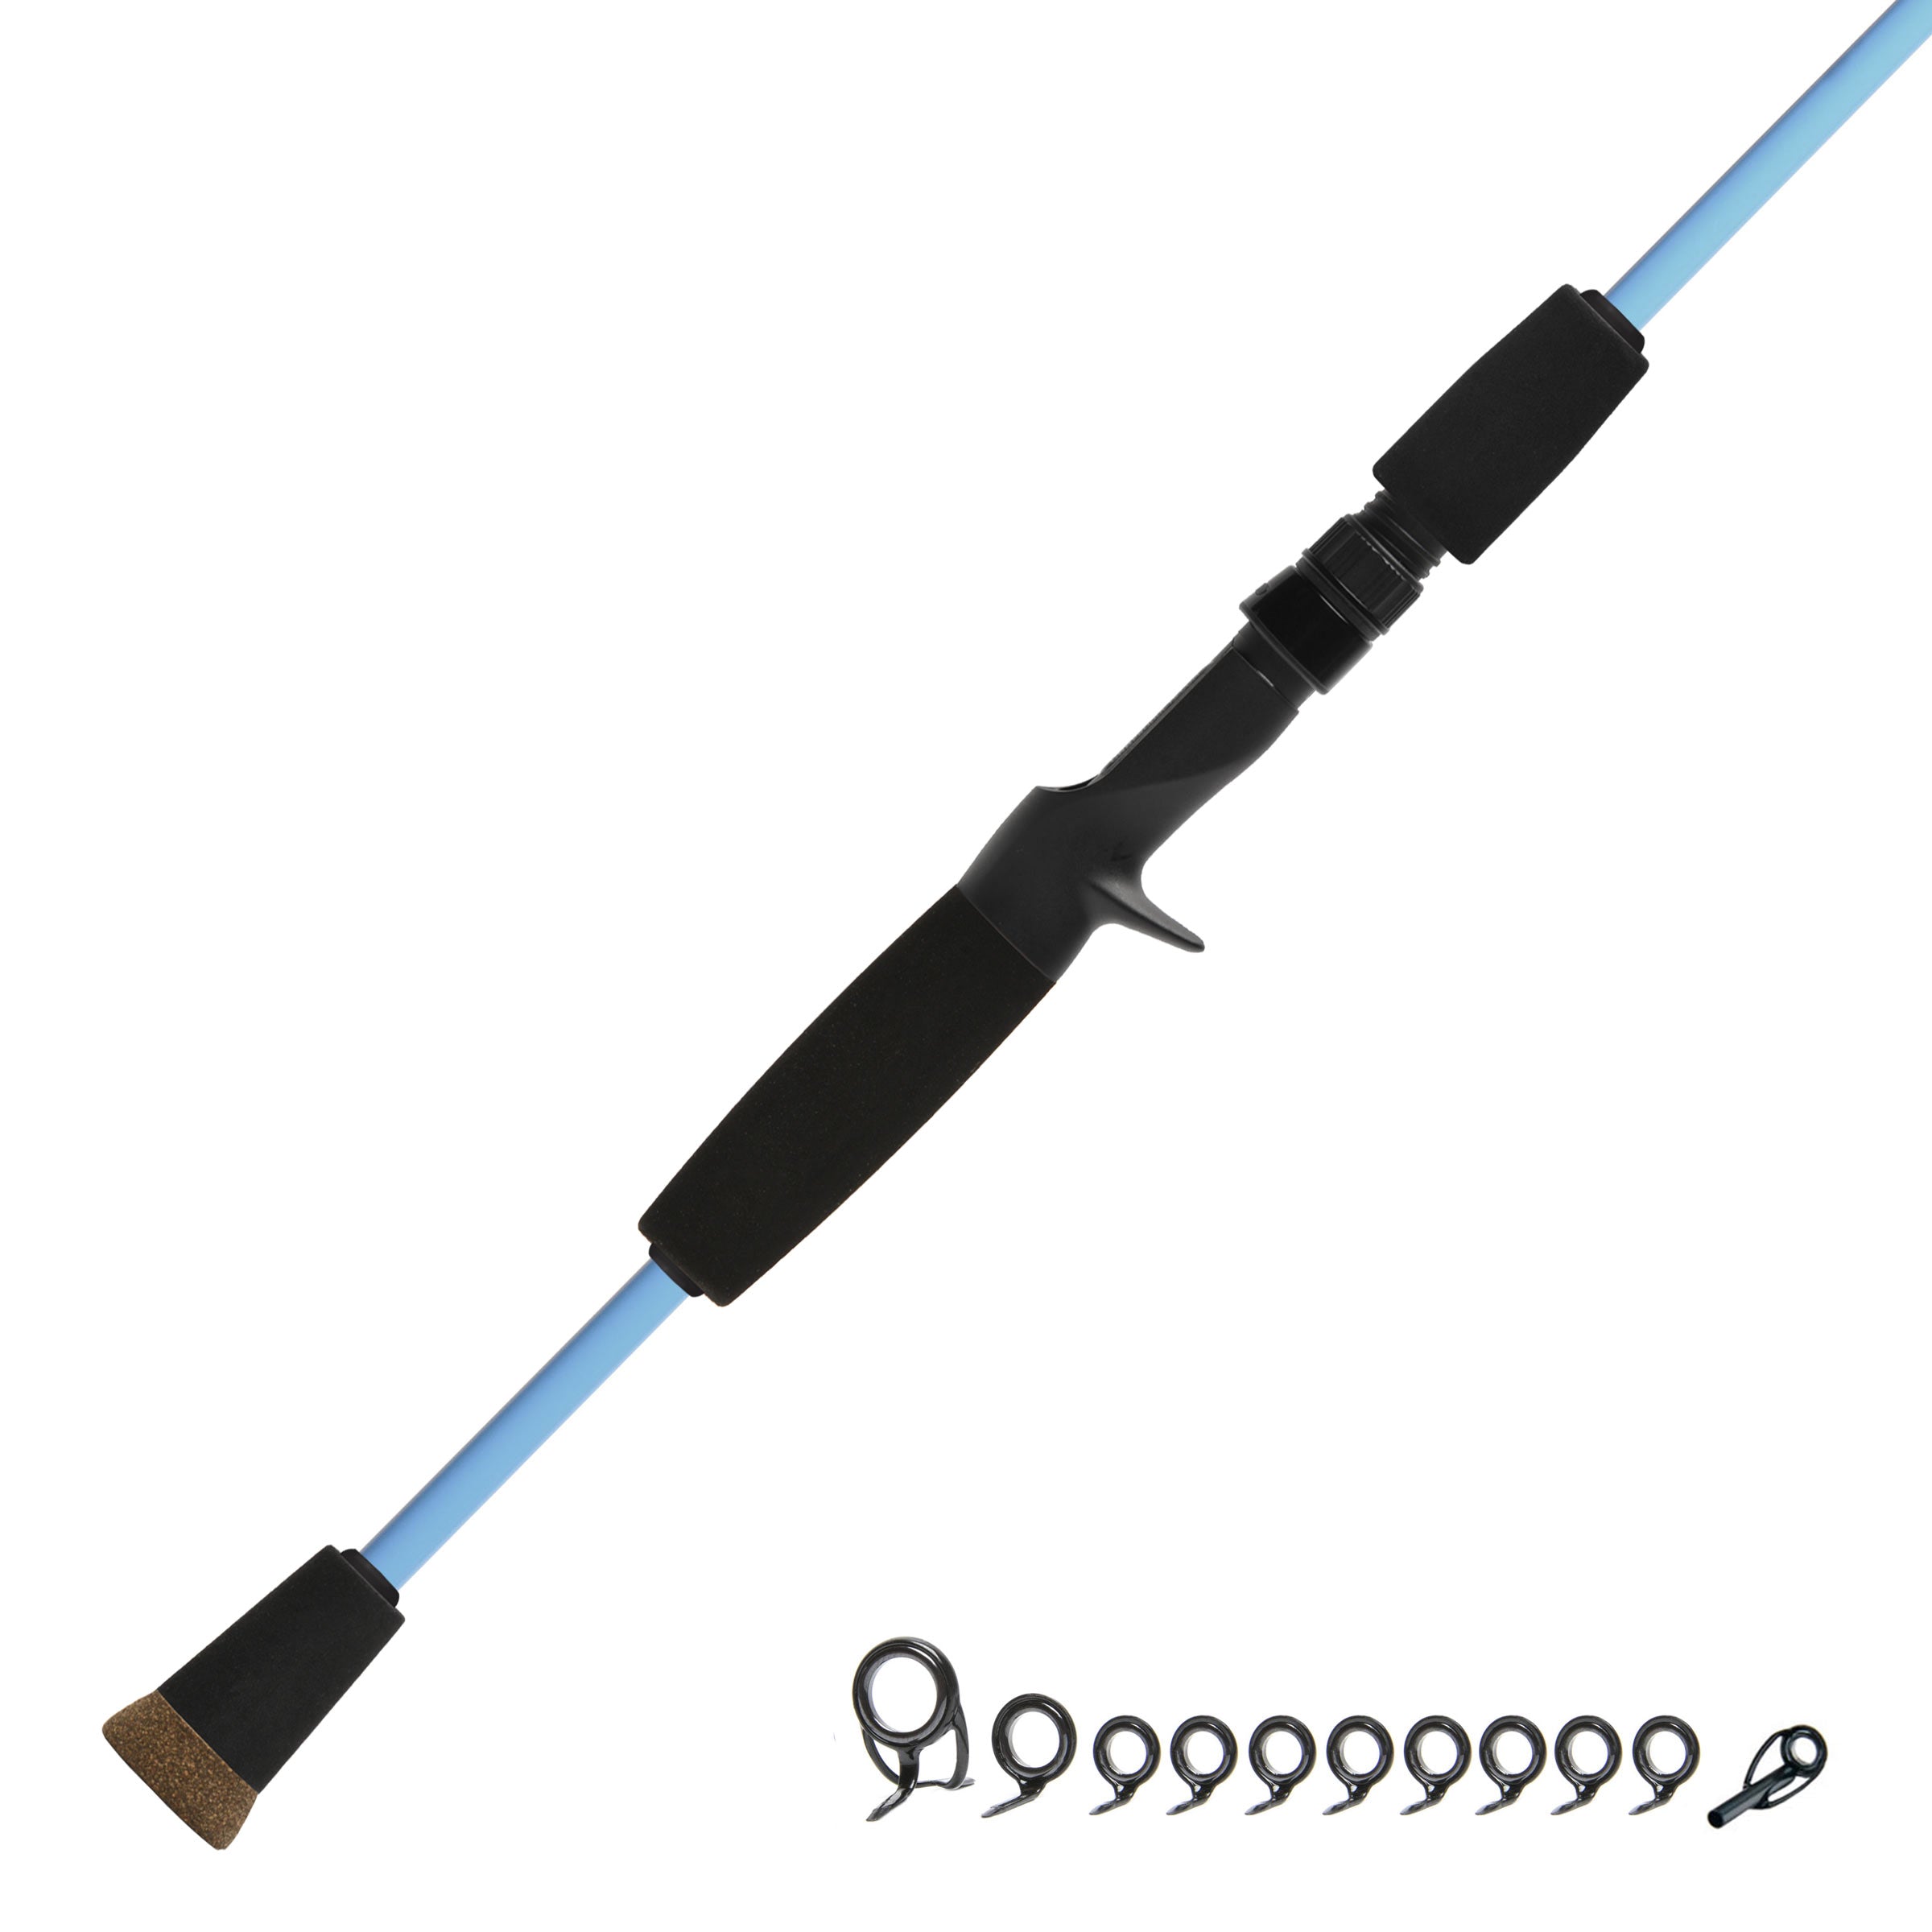 UNICKK Fshing Set 270q17 2.7 BLUE RH 40004 Multicolor Fishing Rod